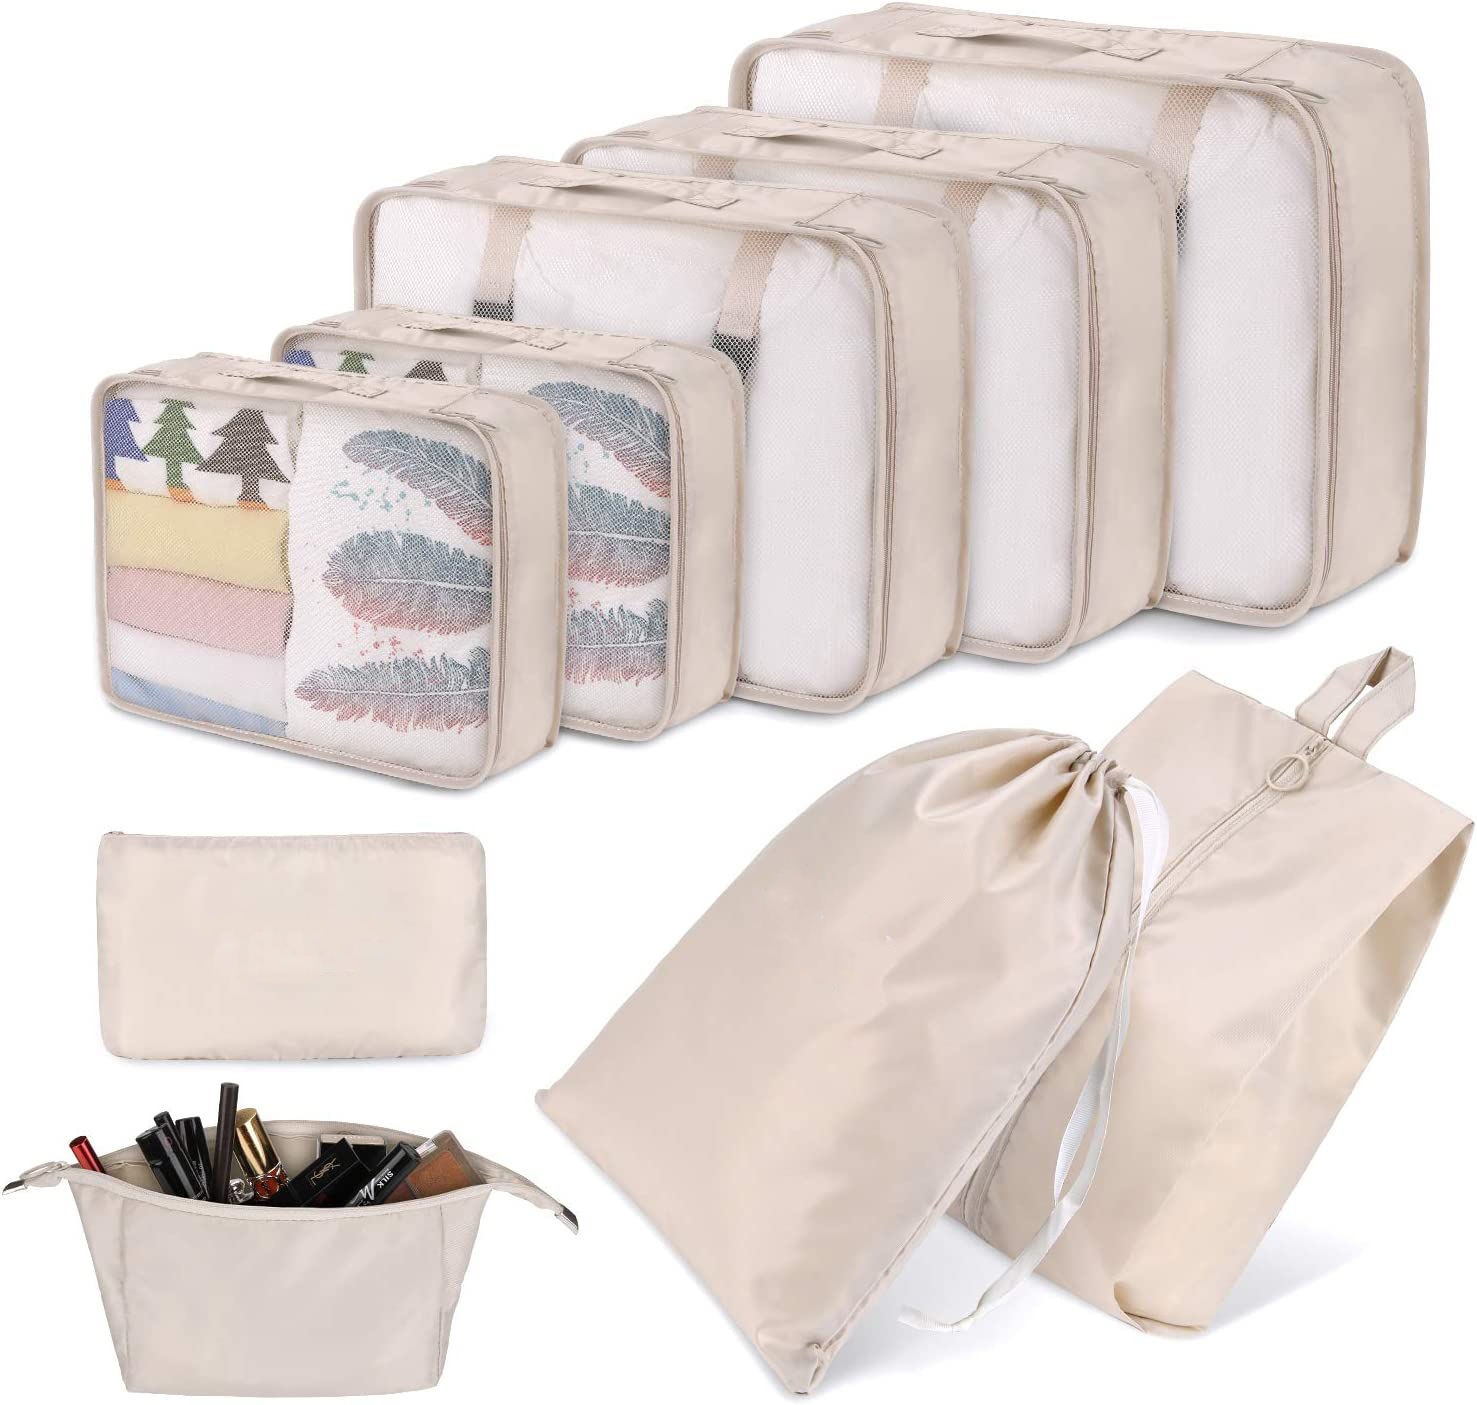 Travel Organizer Bag Set Product Details